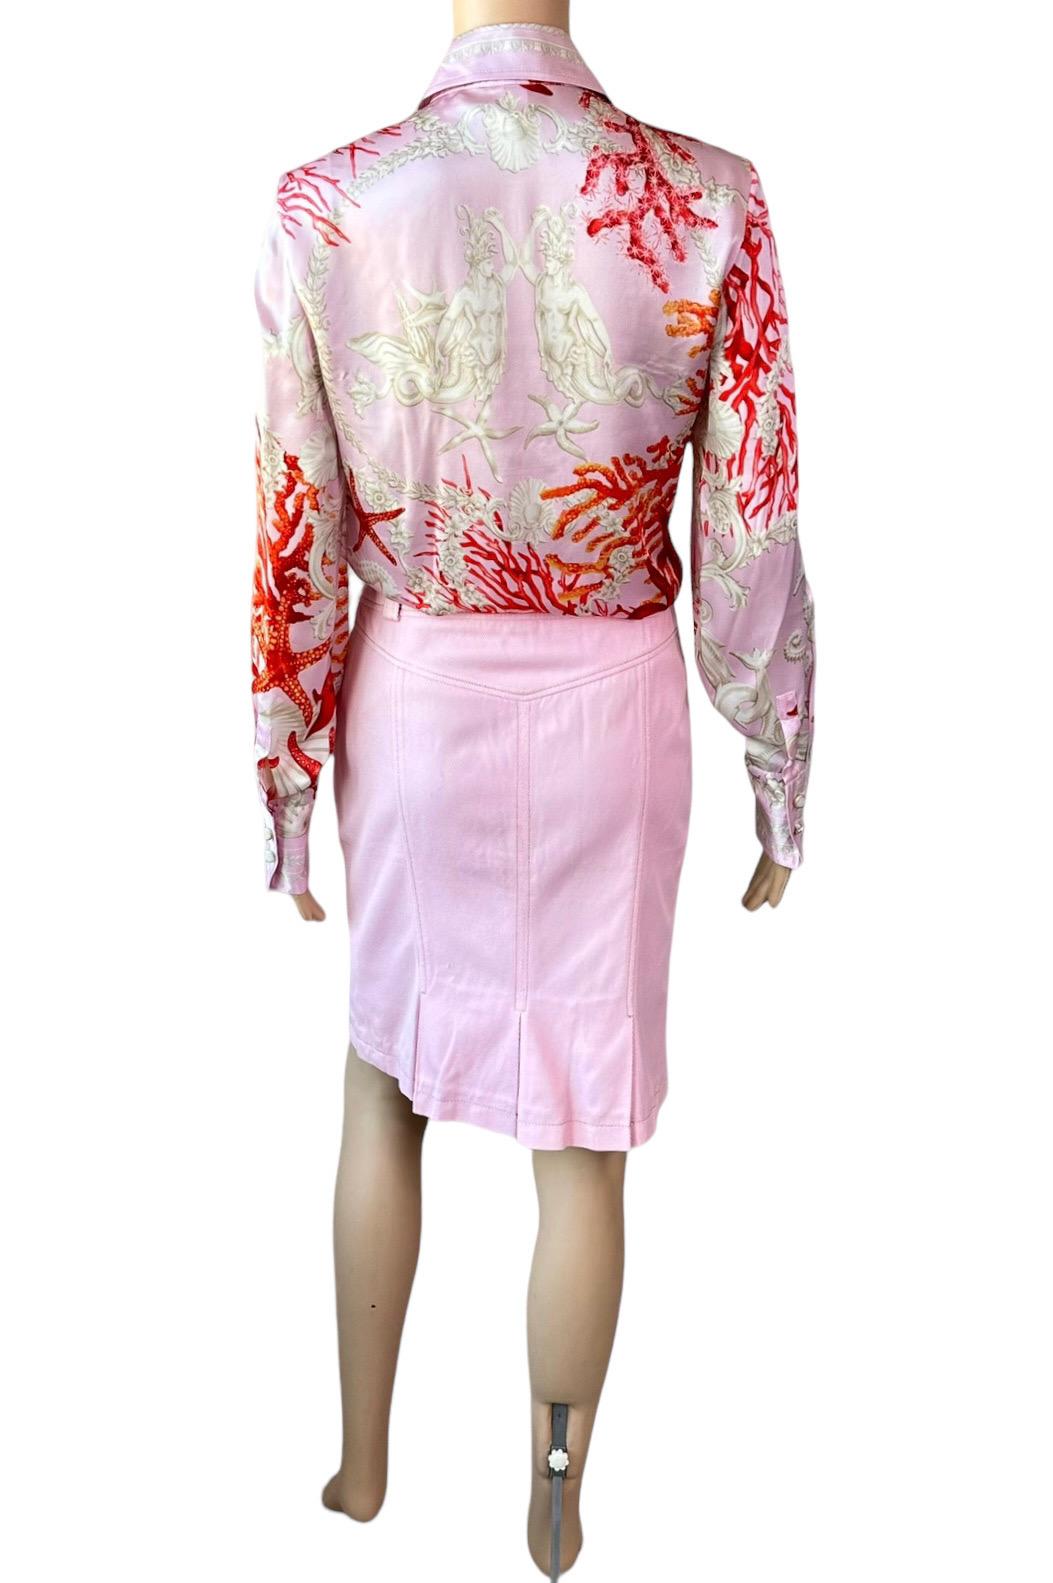 Women's or Men's Versace S/S 2005 Runway Blouse Shirt Top & Skirt 2 Piece Set Ensemble For Sale